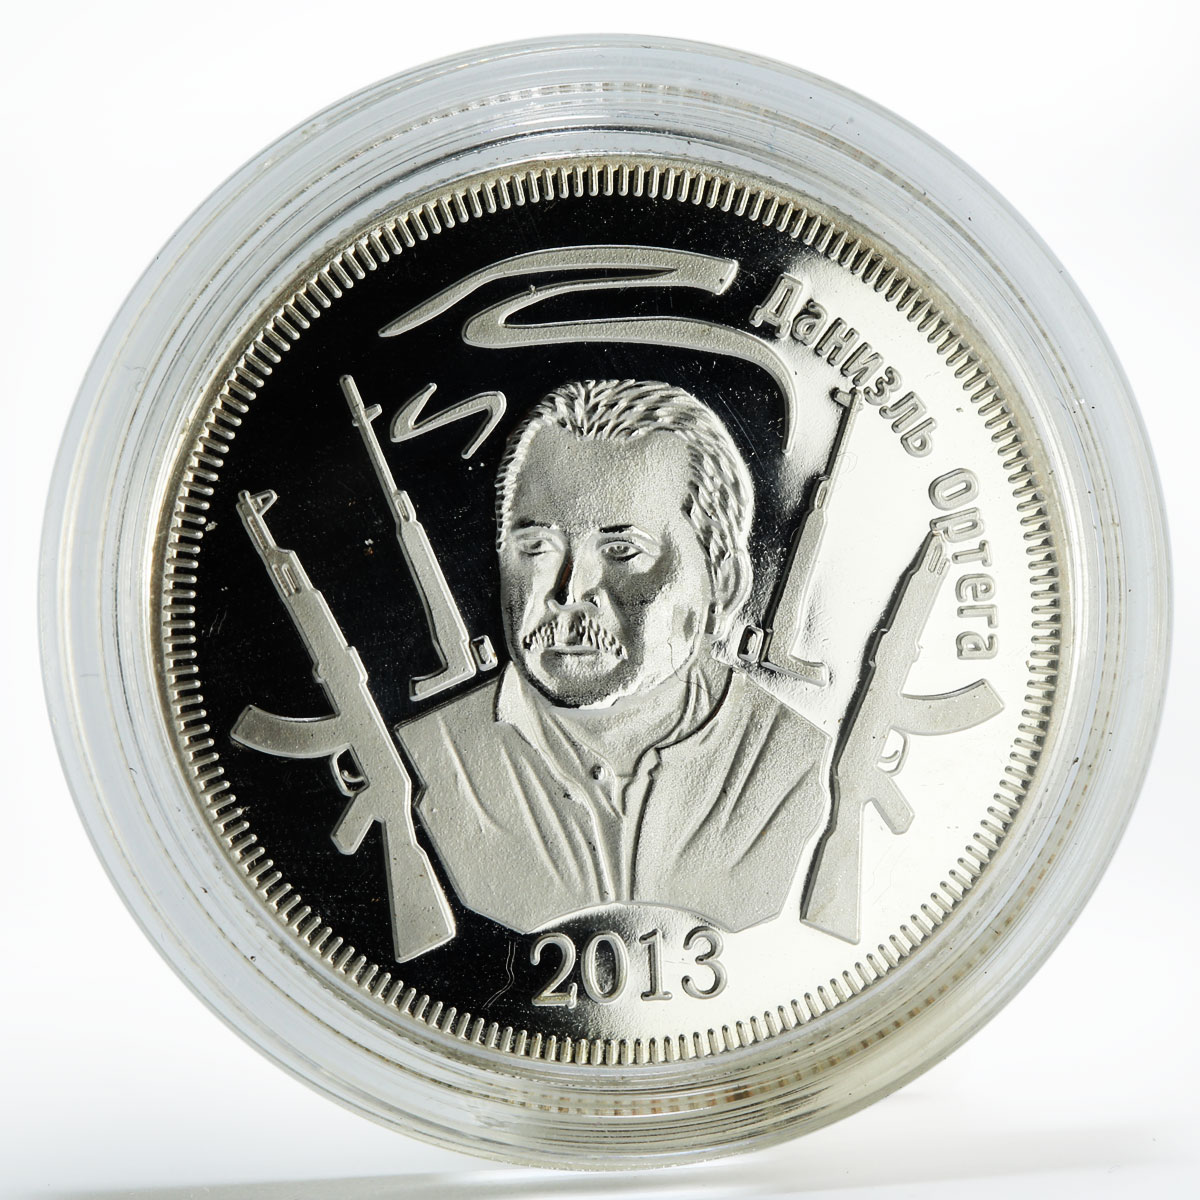 South Ossetia 1 ruble Daniel Ortega copper nickel coin 2013